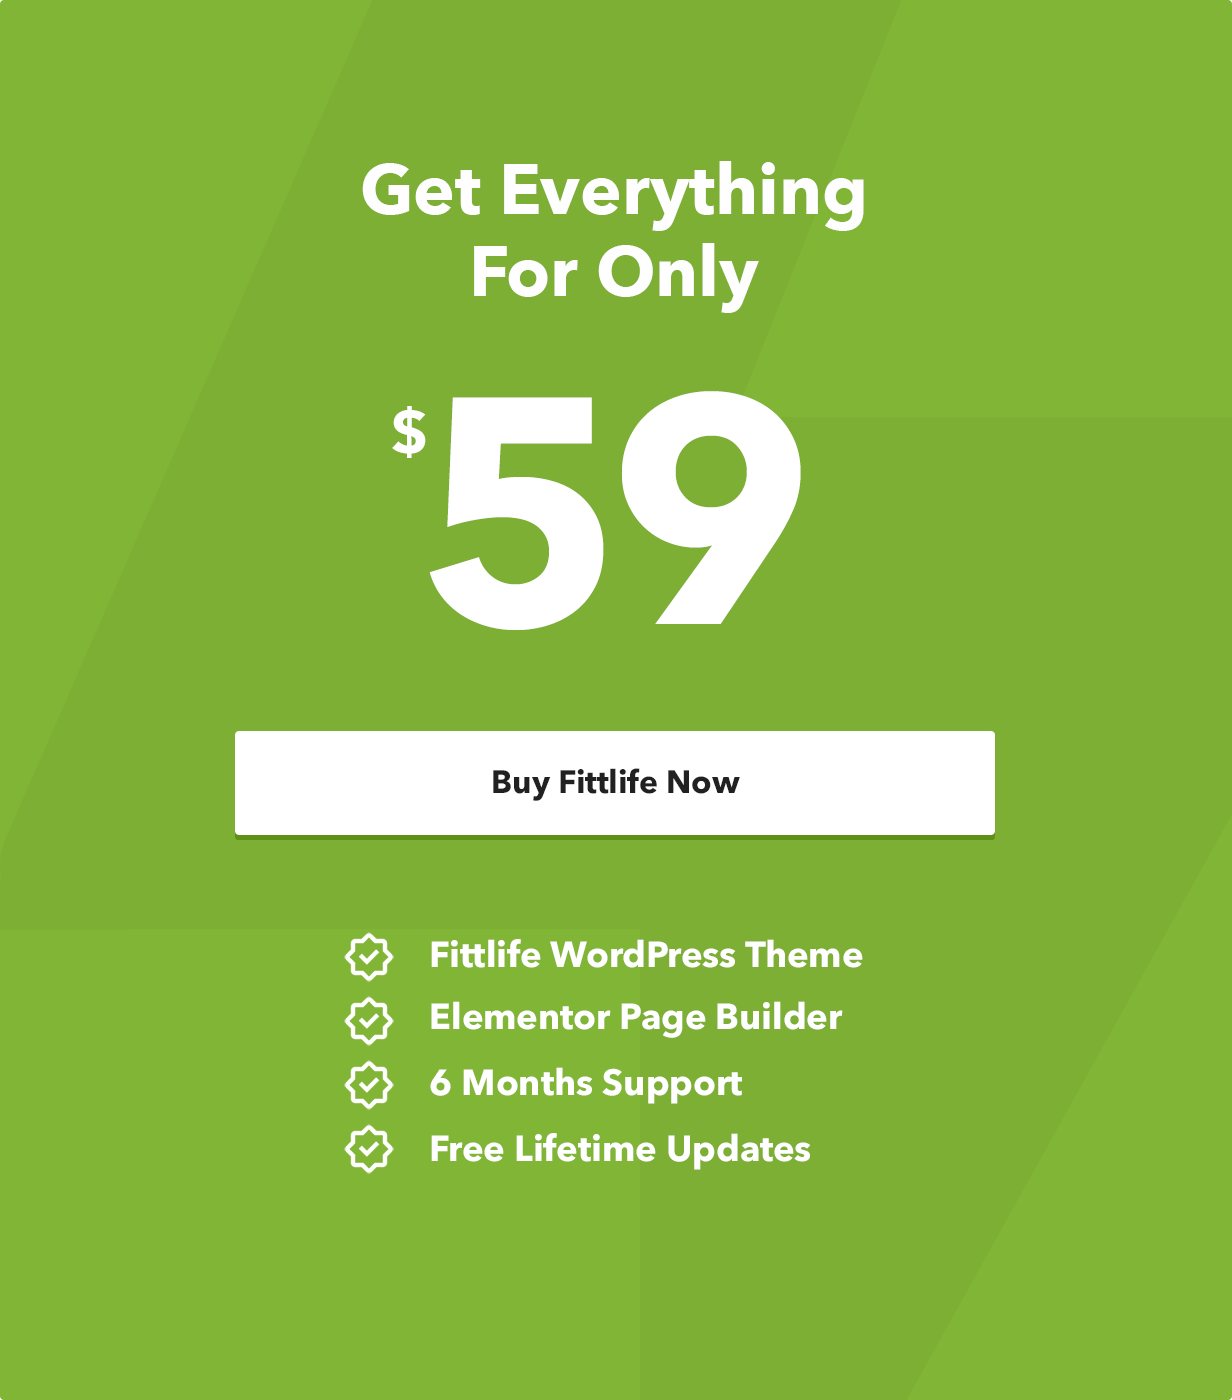 Fittlife WordPress Theme Price